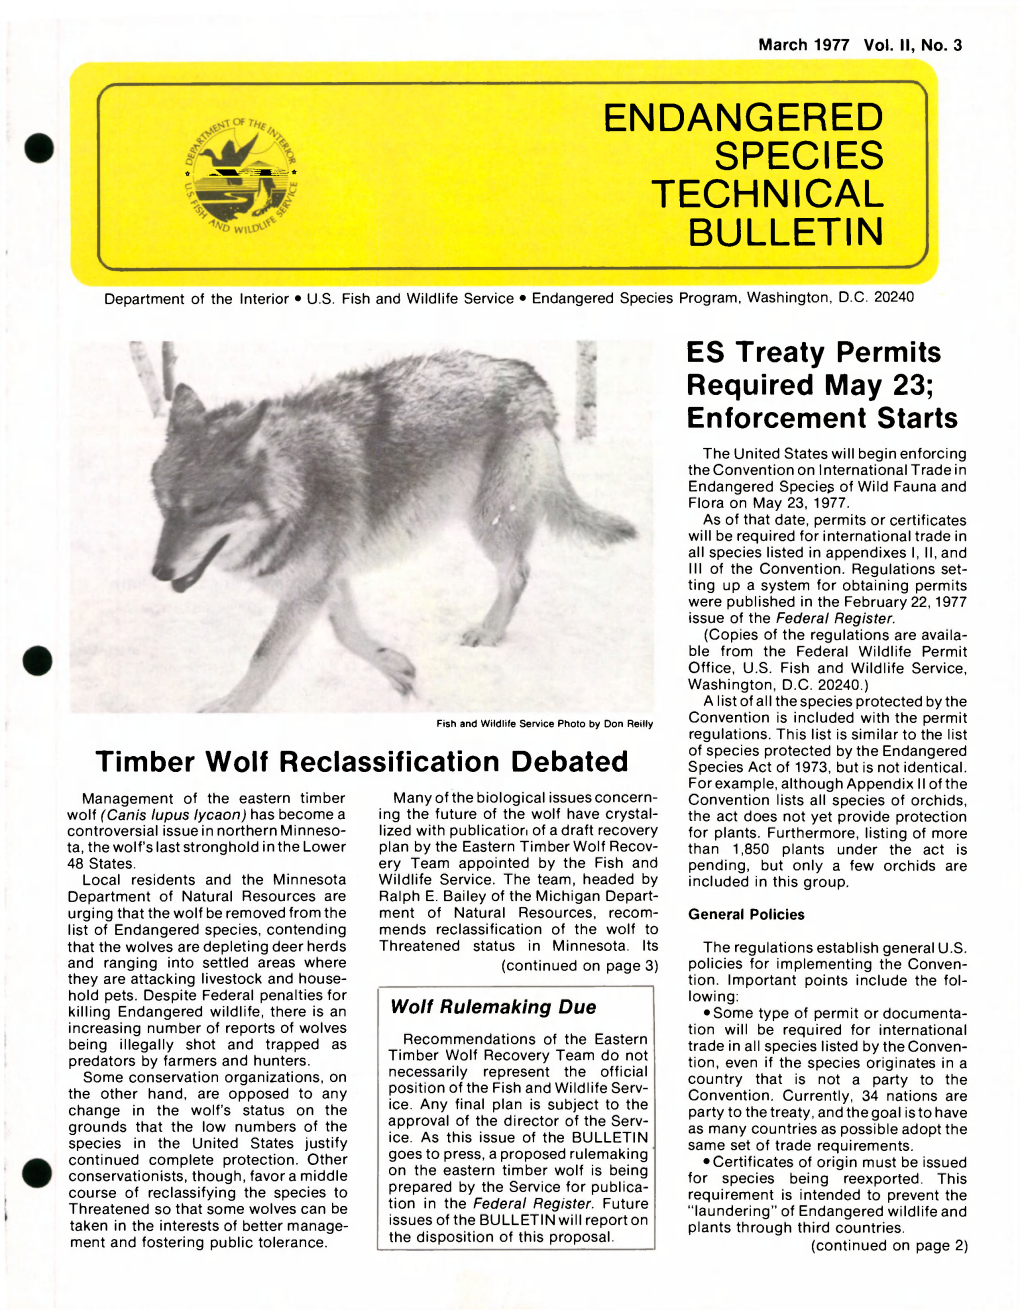 Endangered Species Technical Bulletin